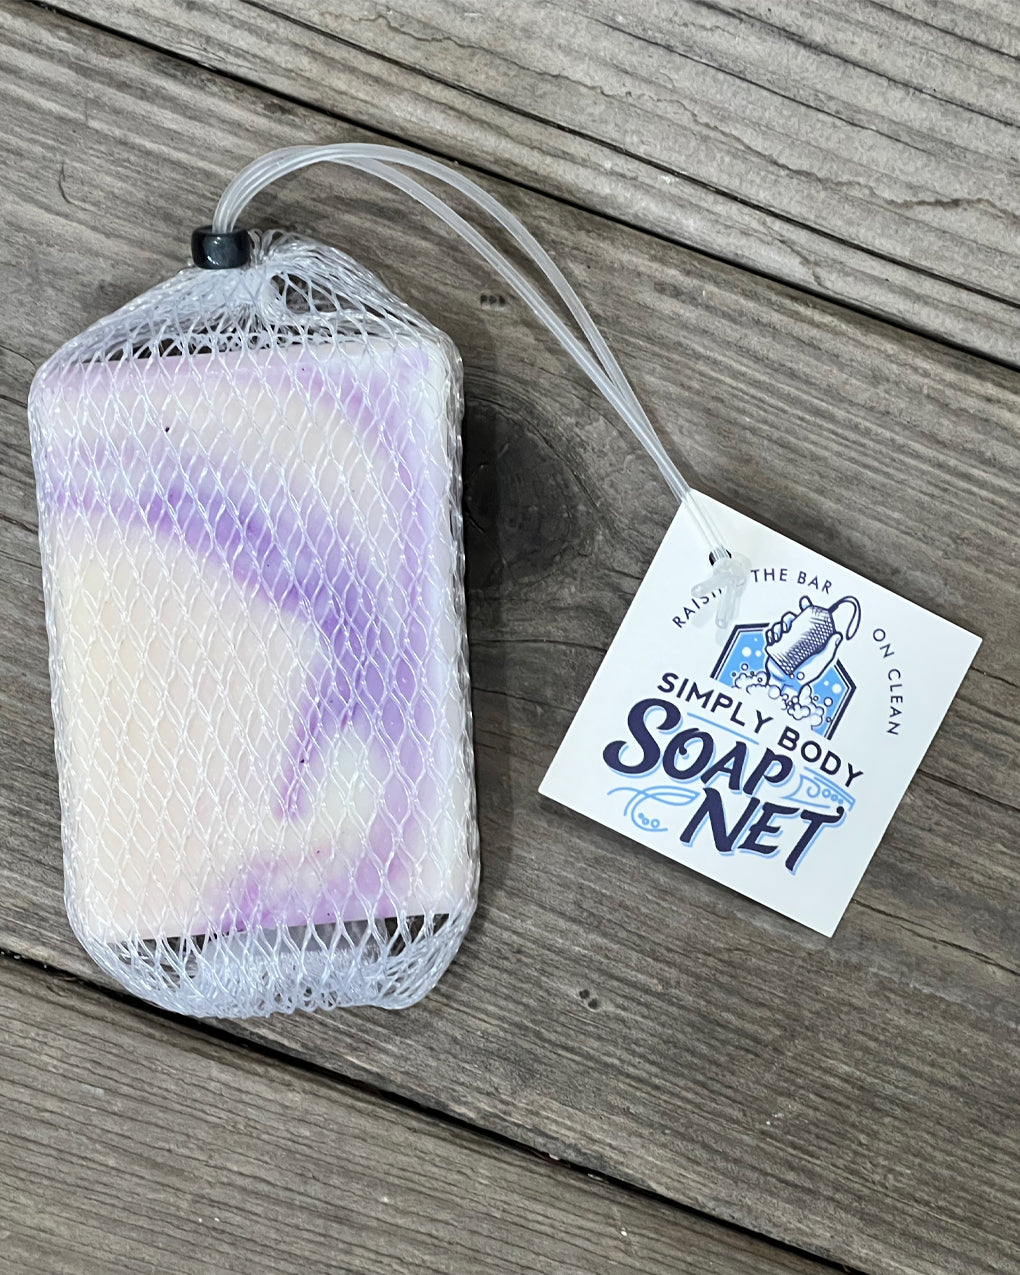 Soap Saver Net